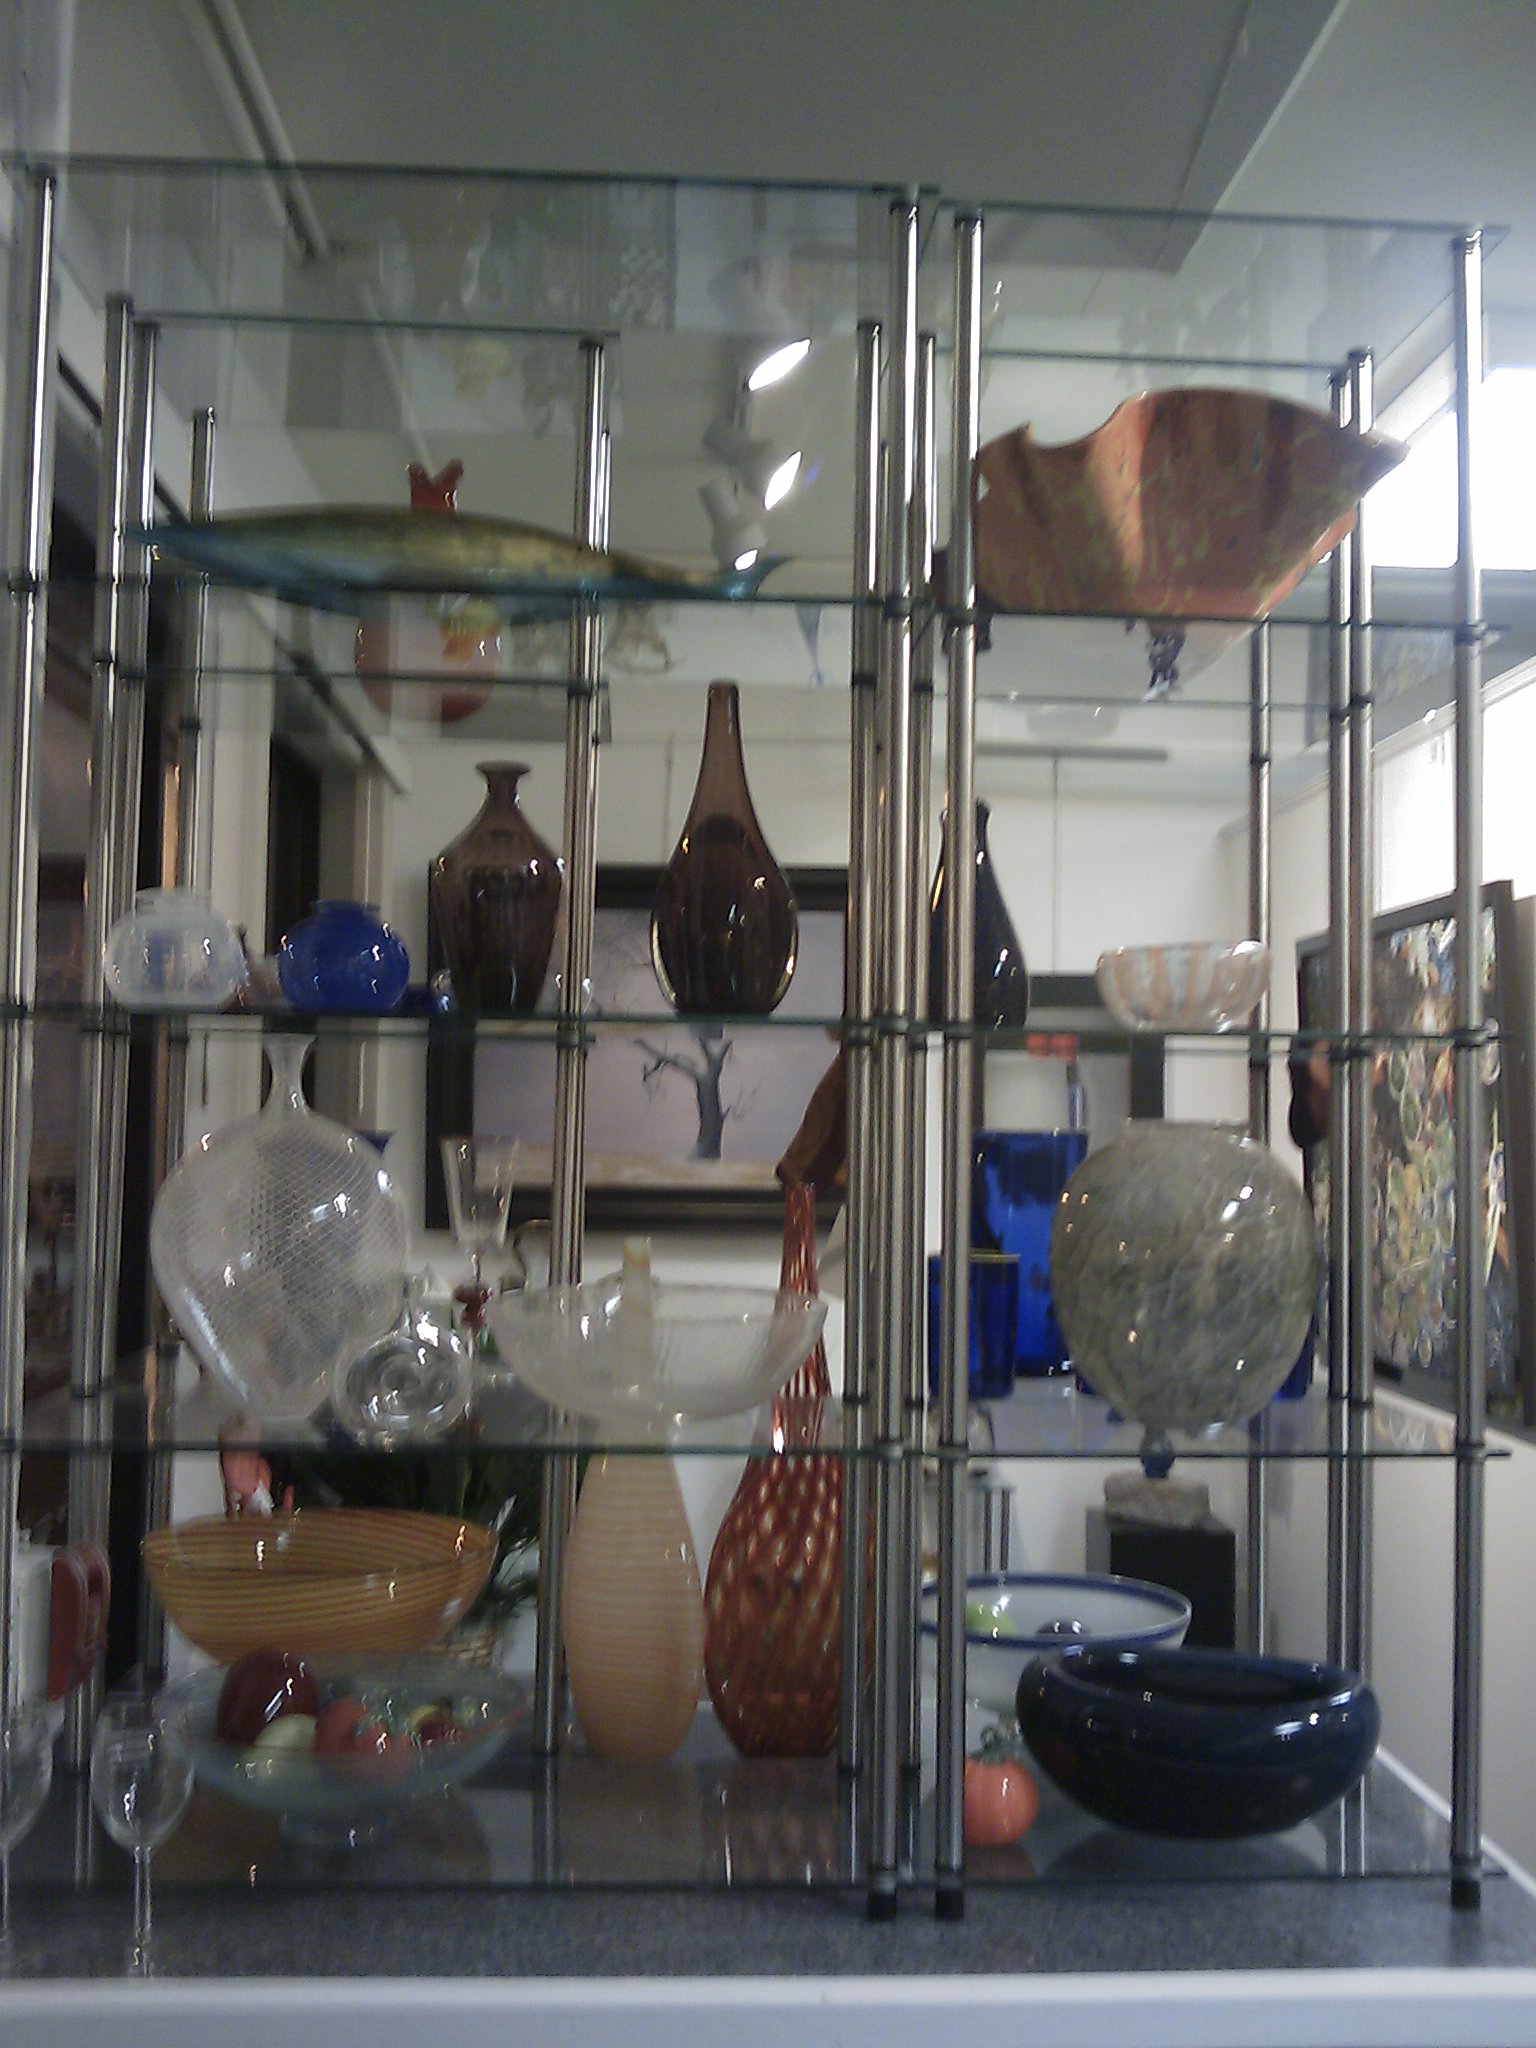 Glass and Ceramics on Display